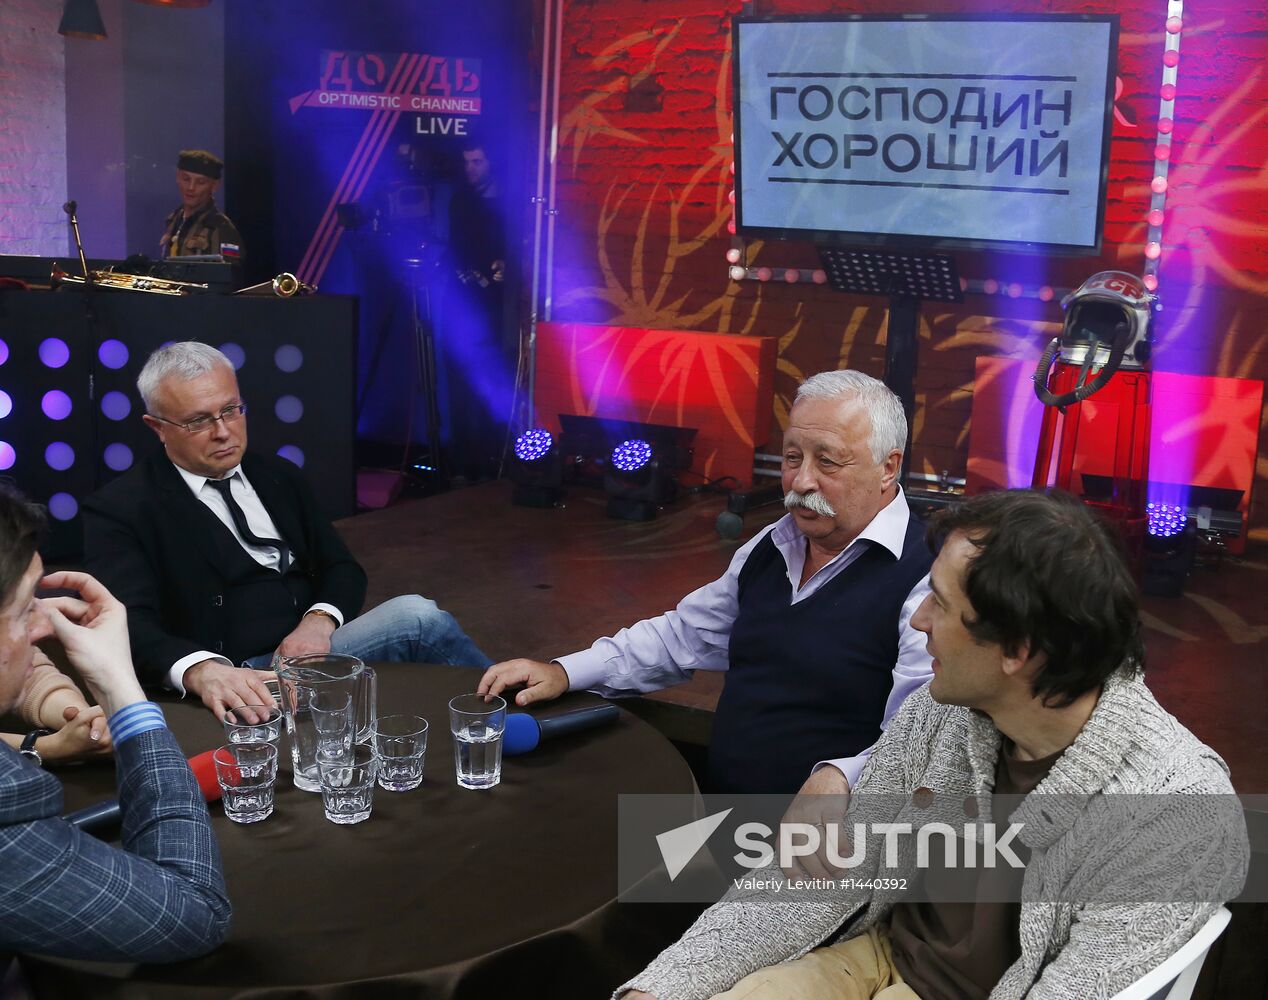 Live telecast of "newsical" Fair Gentleman on Dozhd TV